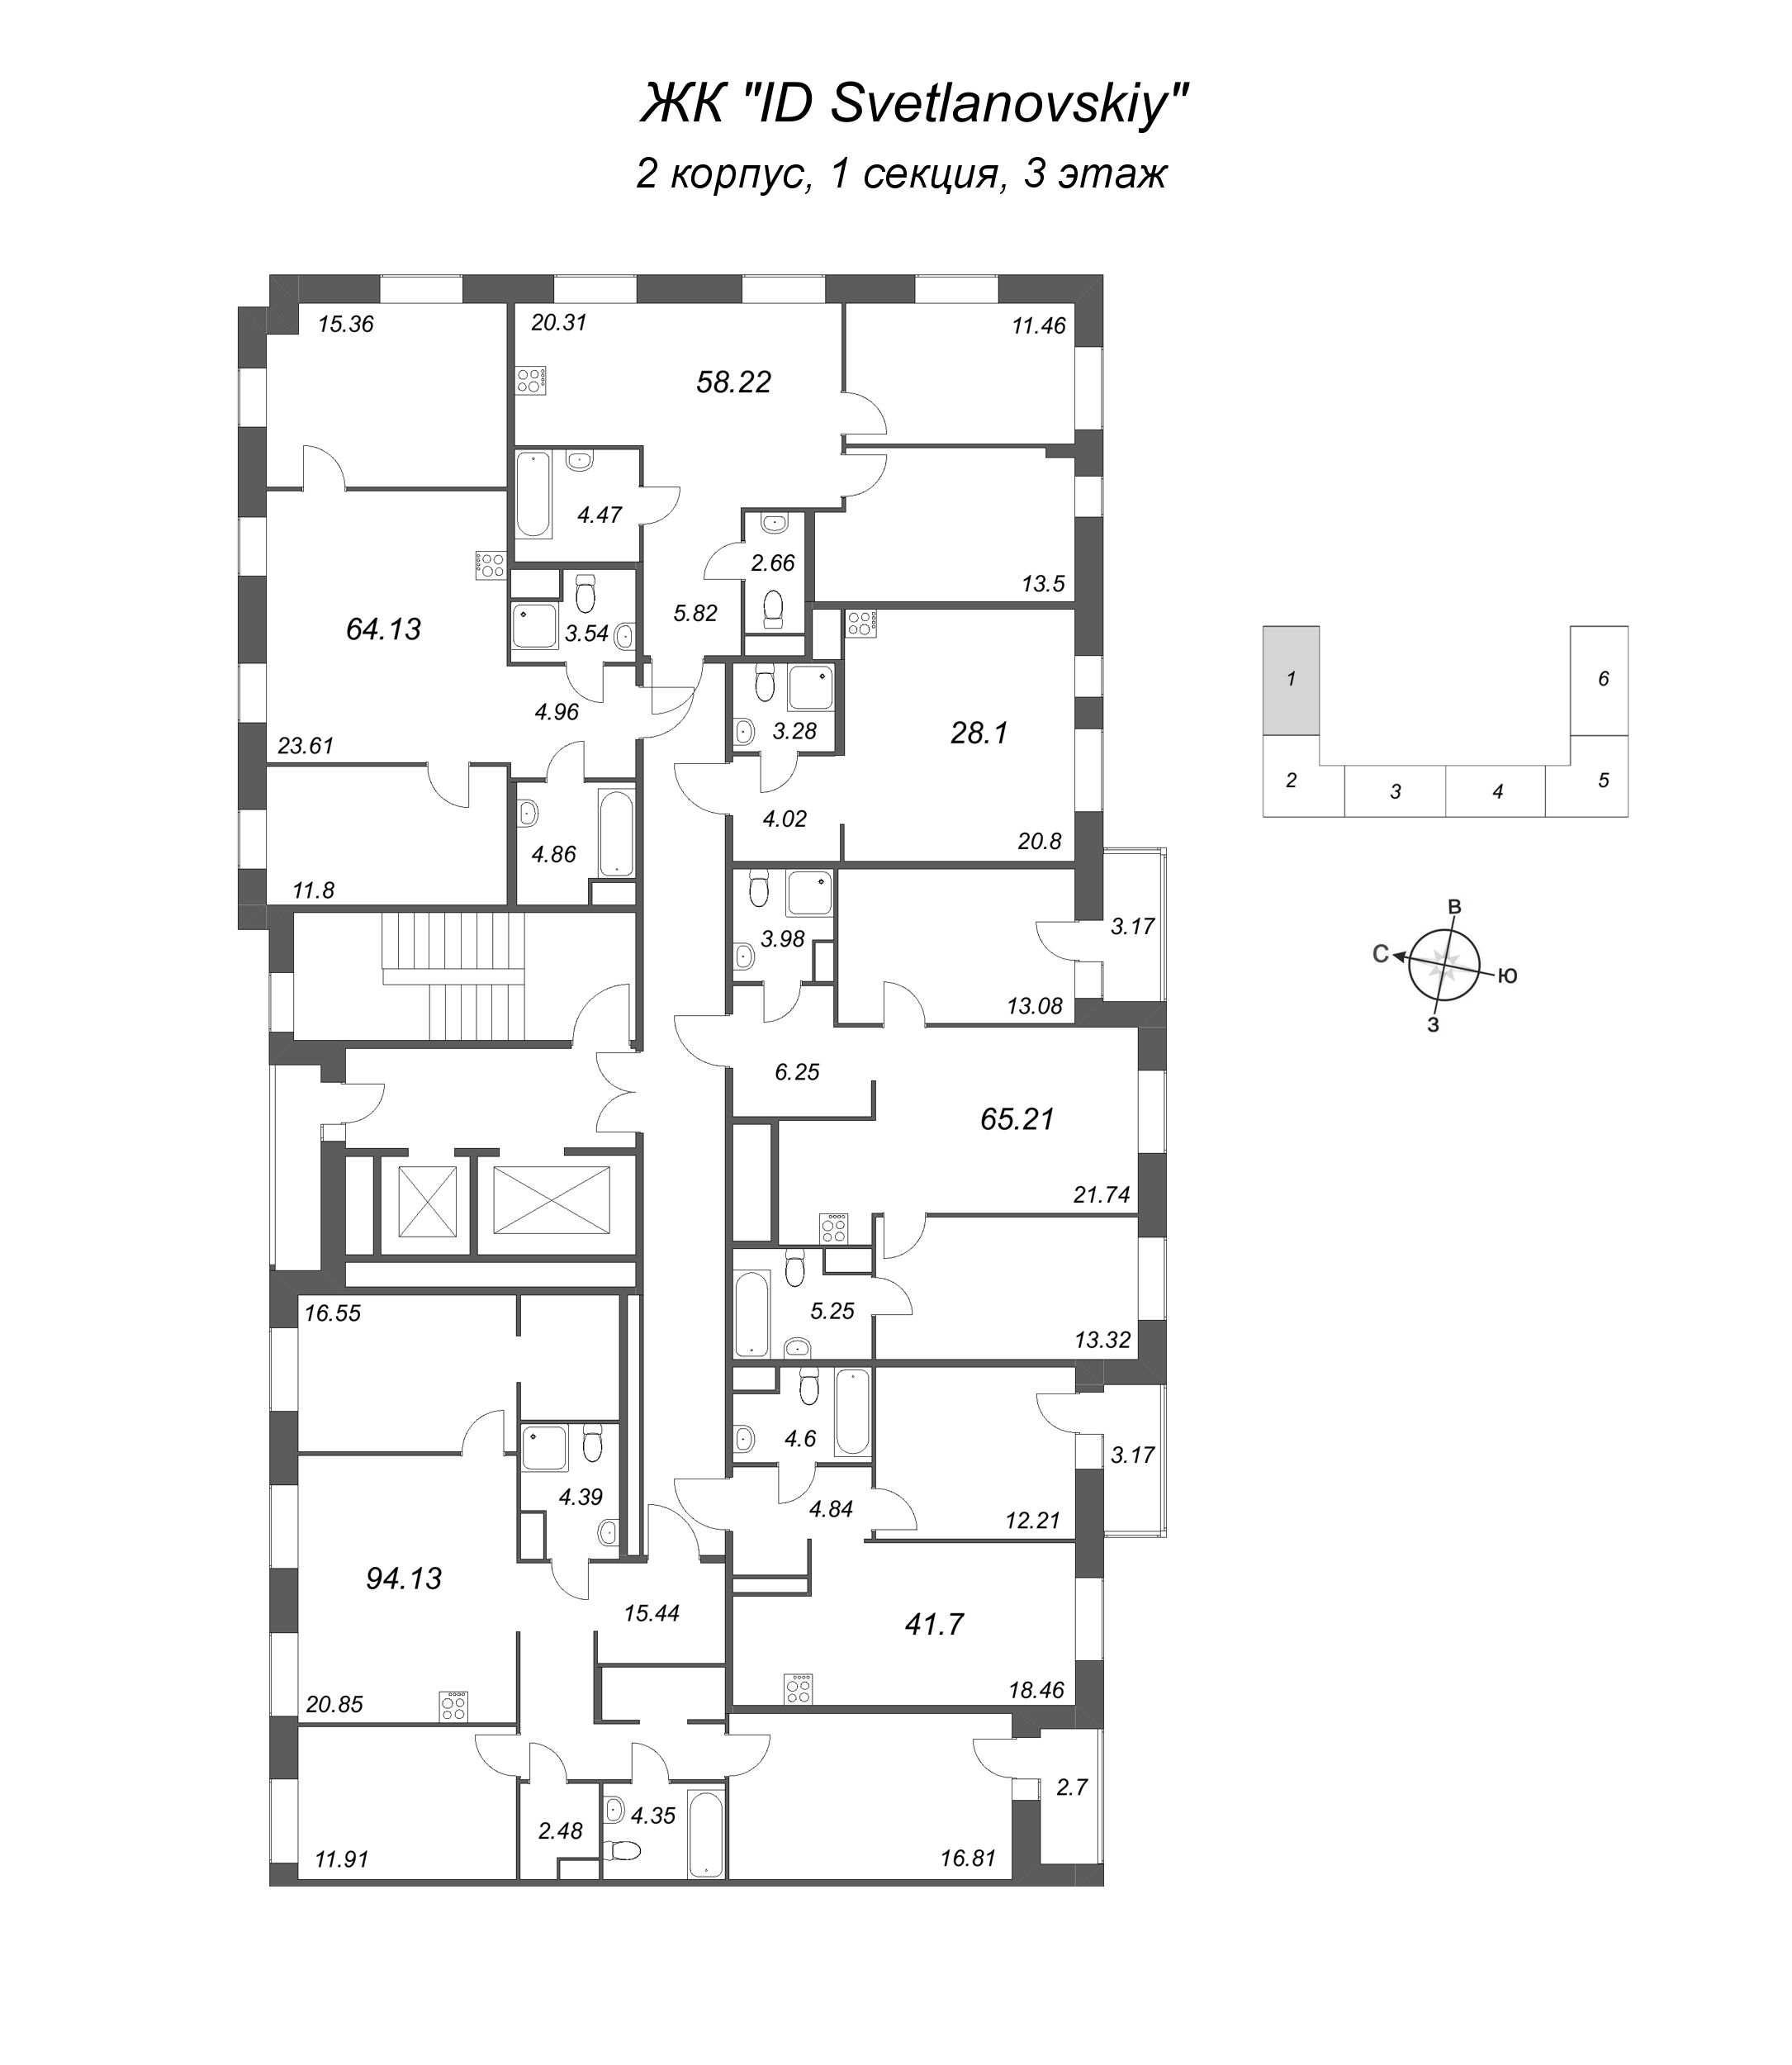 4-комнатная (Евро) квартира, 94.13 м² - планировка этажа